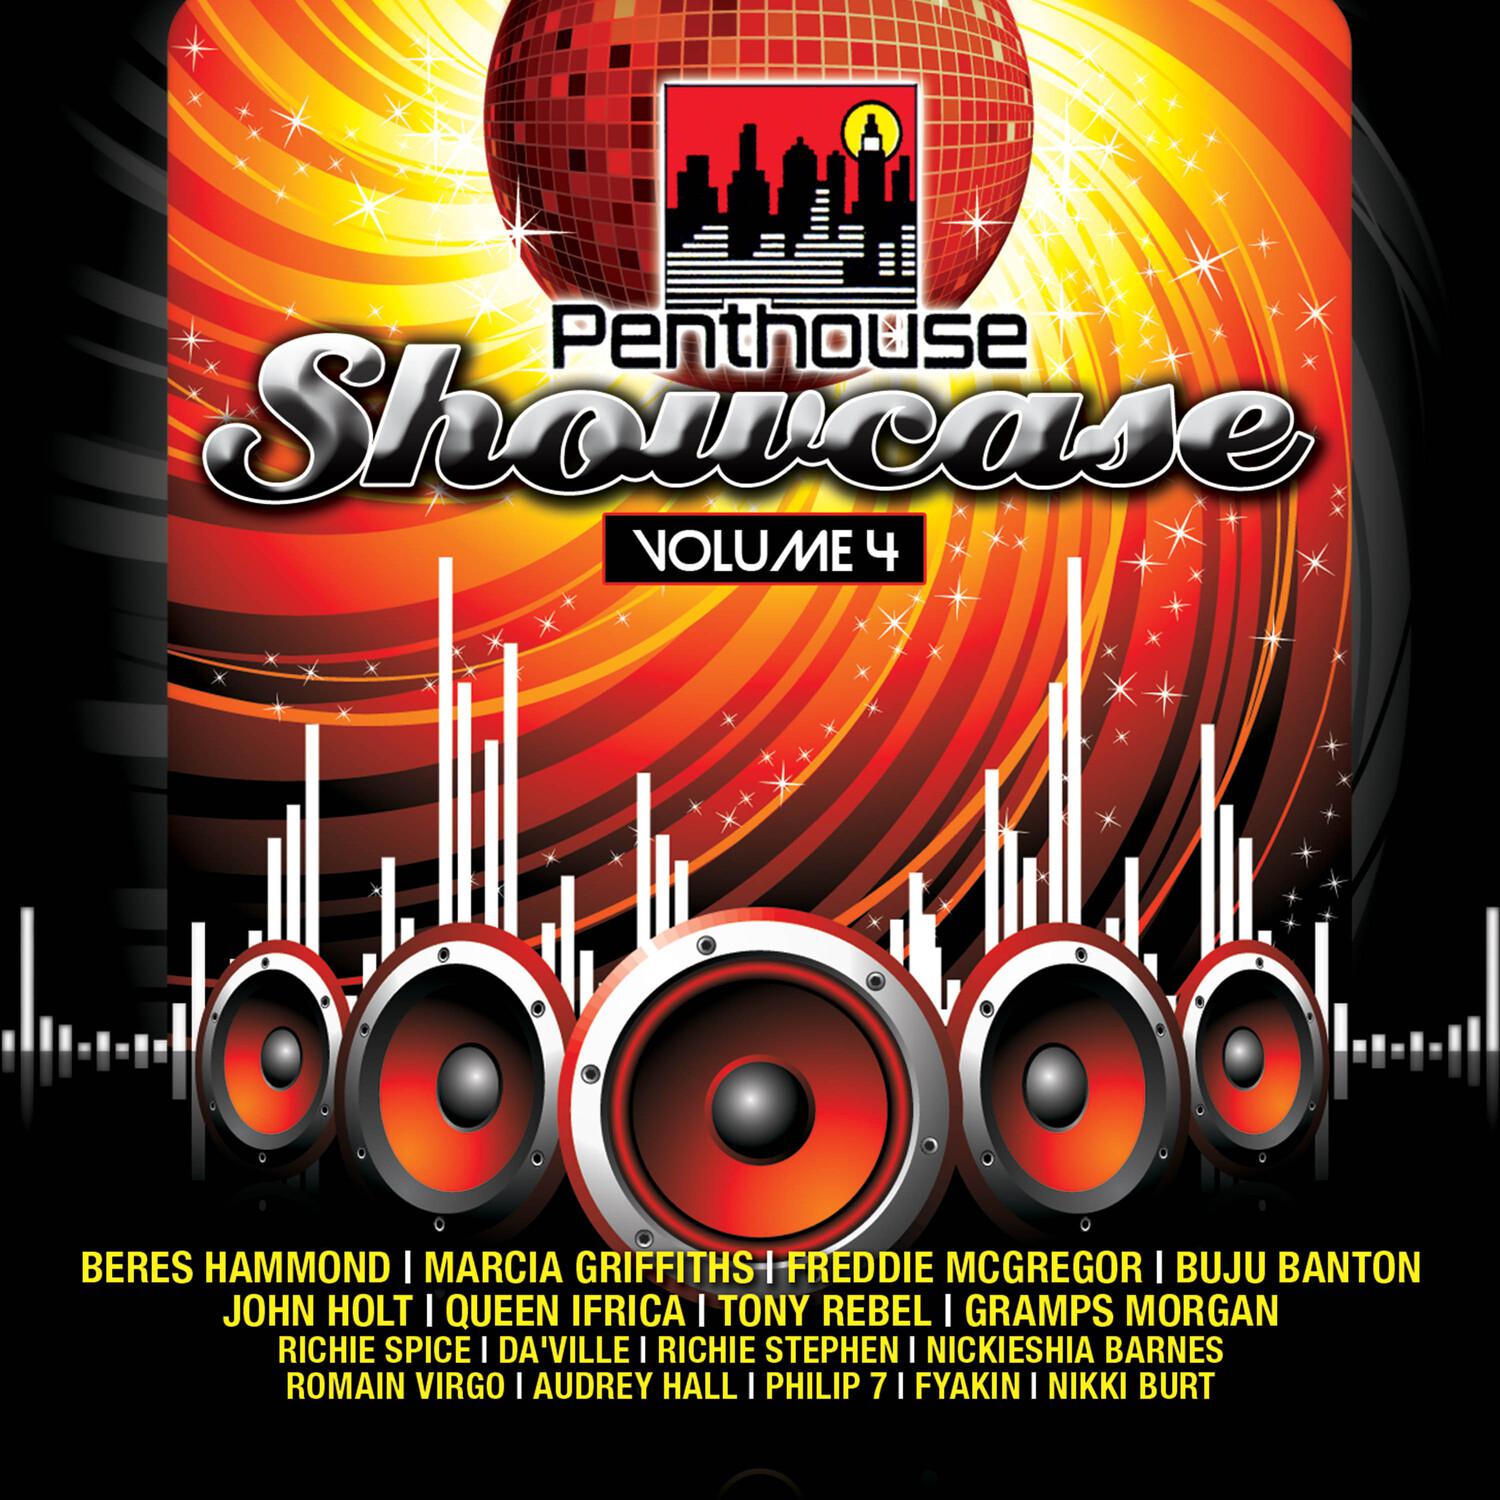 Penthouse Showcase (Vol 4)